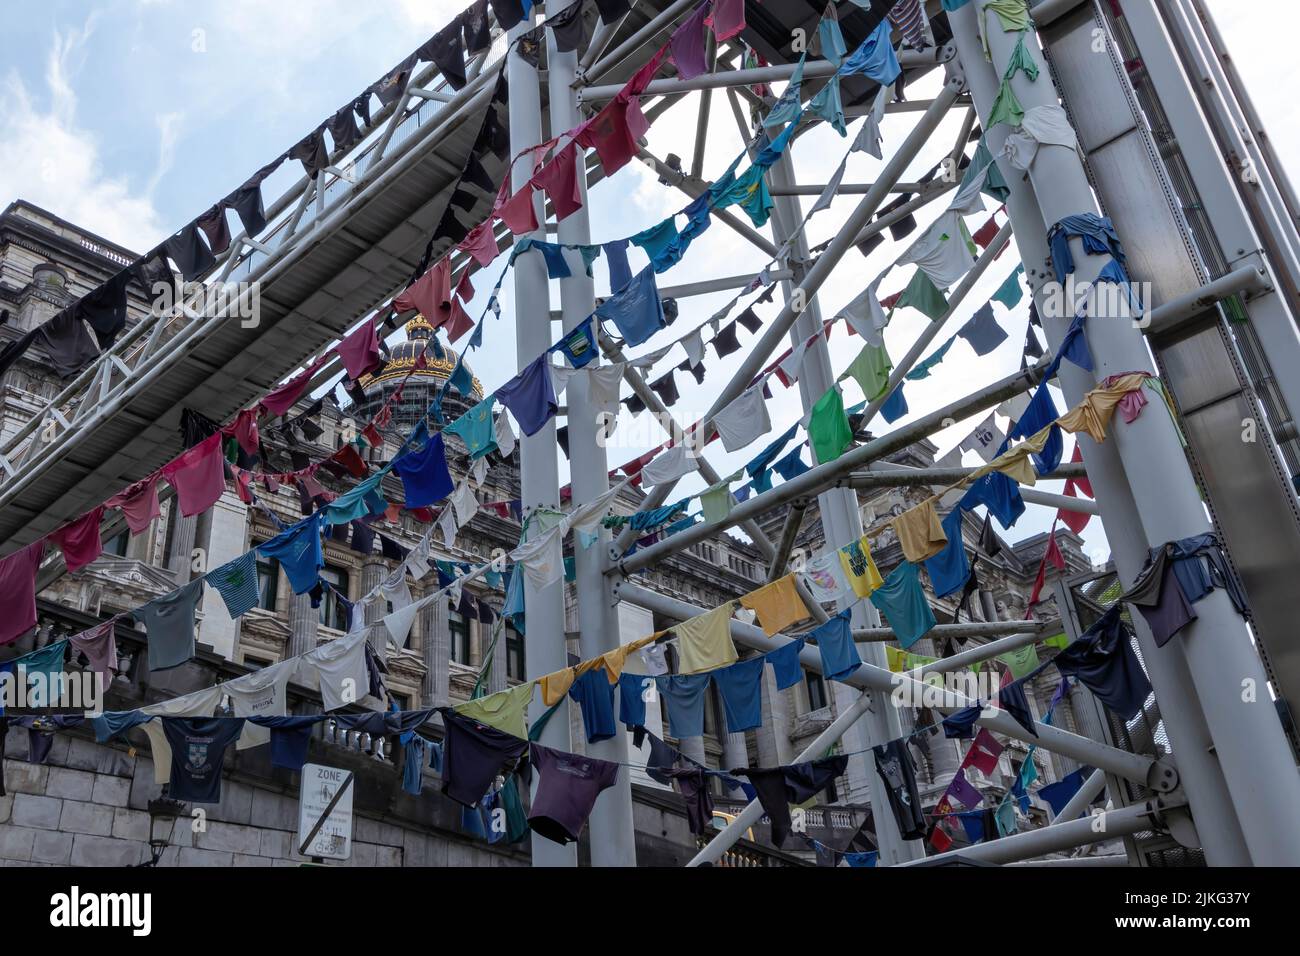 Brussels, Belgium - July 16, 2018: The installation entitled “If I had wings” by Finnish artist Kaarina Kaikkonen on the Marolles lift Stock Photo